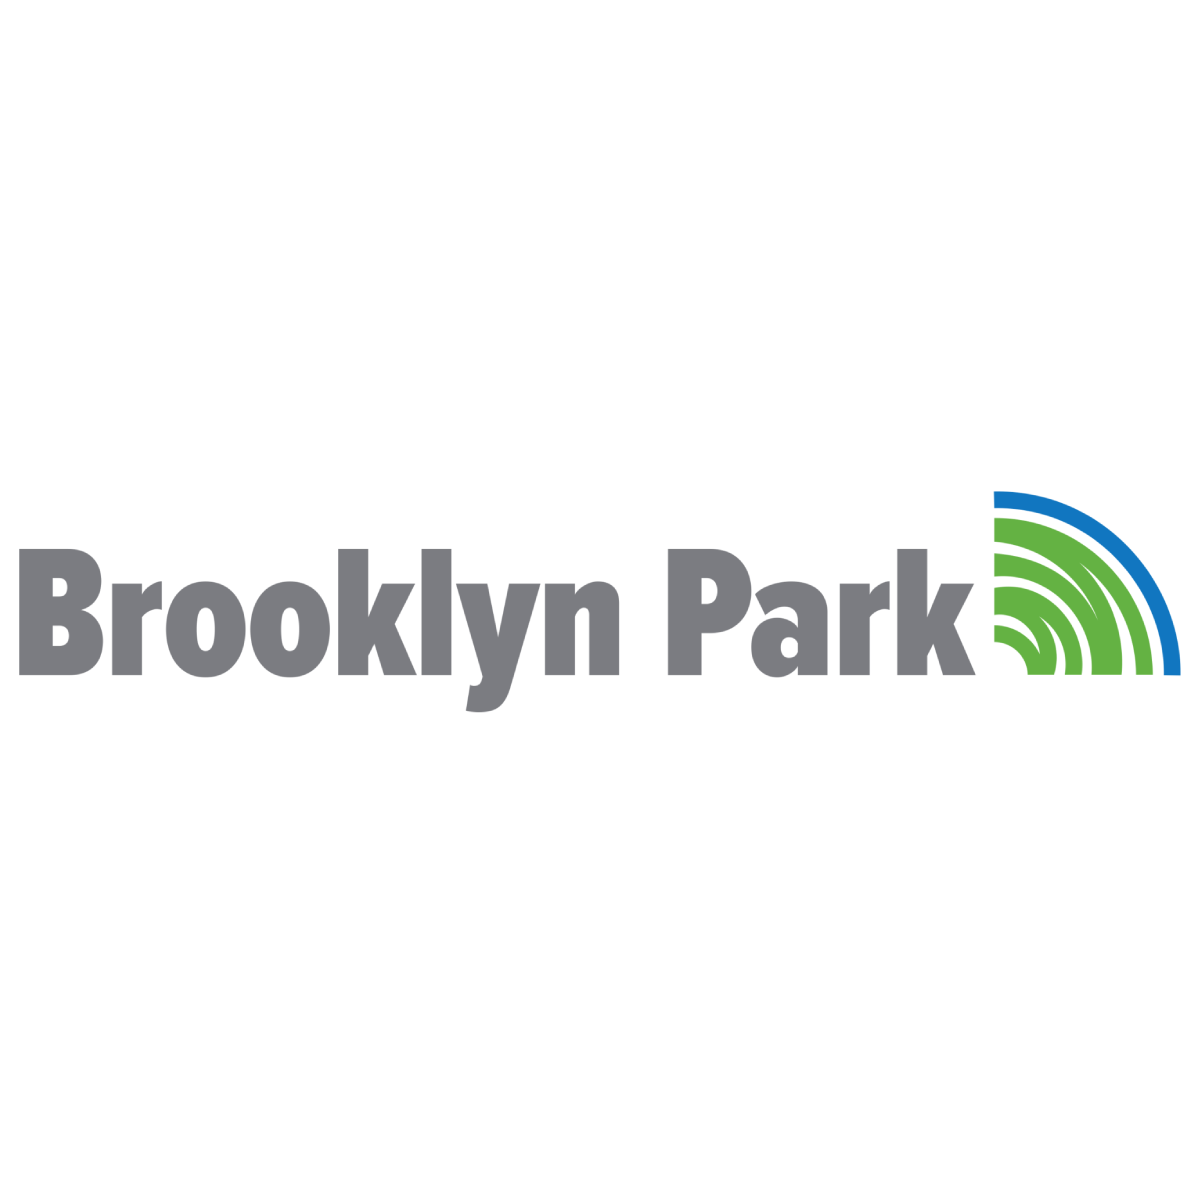 Ciudad de Brooklyn Park 
brooklynpark.org